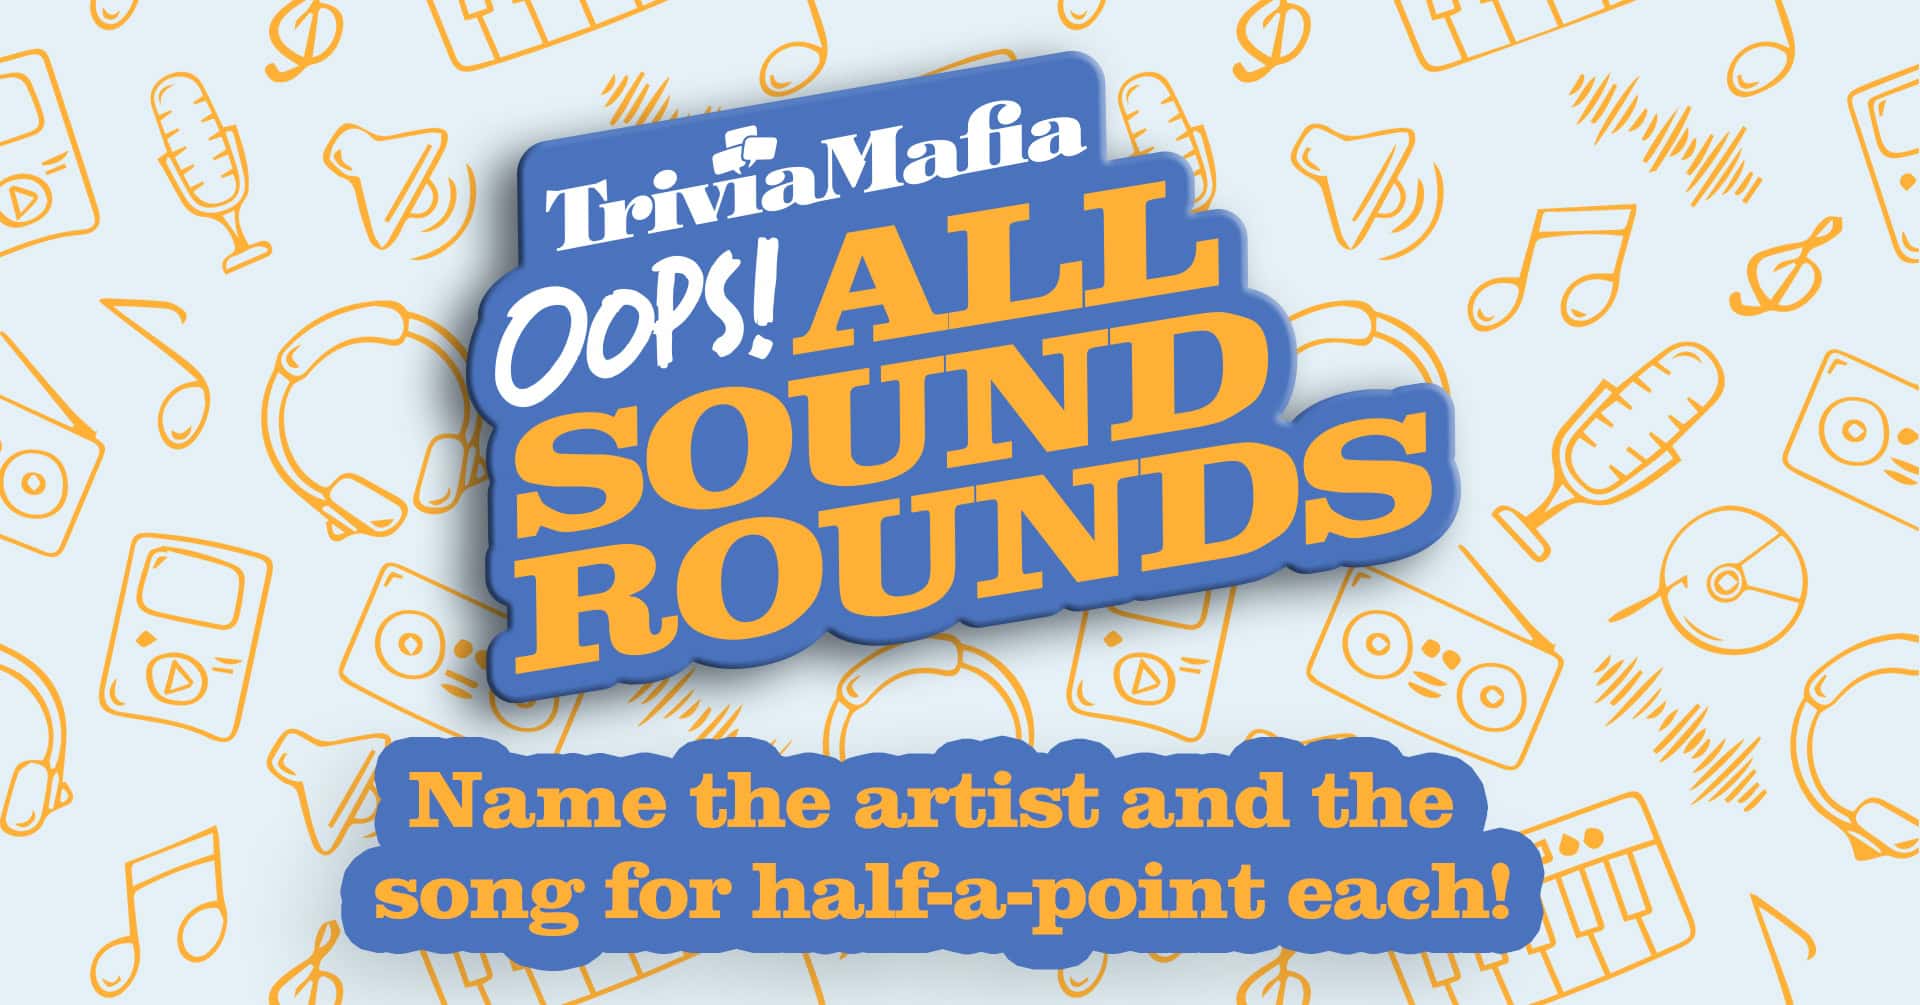 Trivia Mafia – Oops, All Sound Rounds!